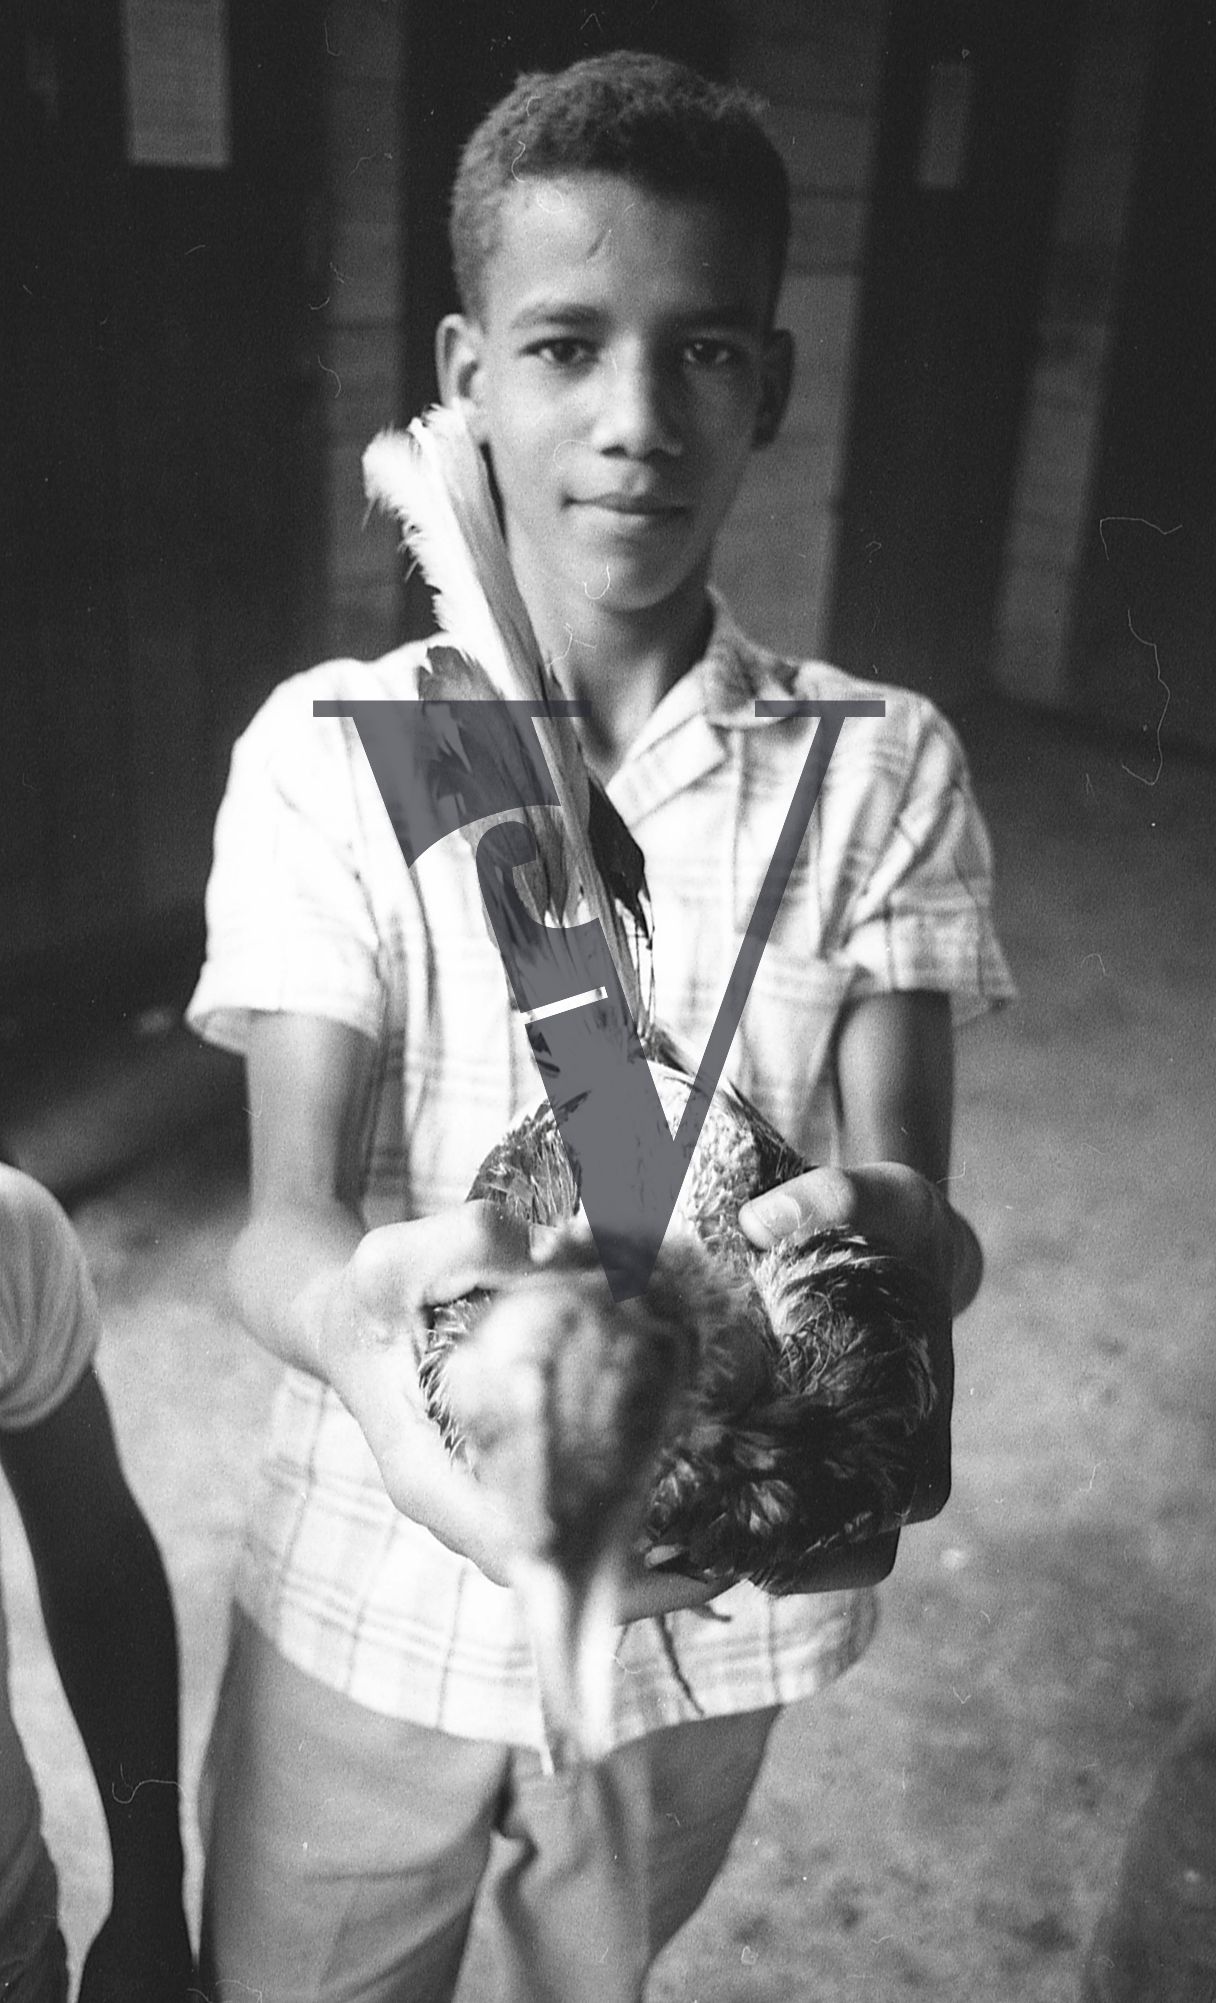 Dominican Republic, cockfight, boy, portrait, holding bird.